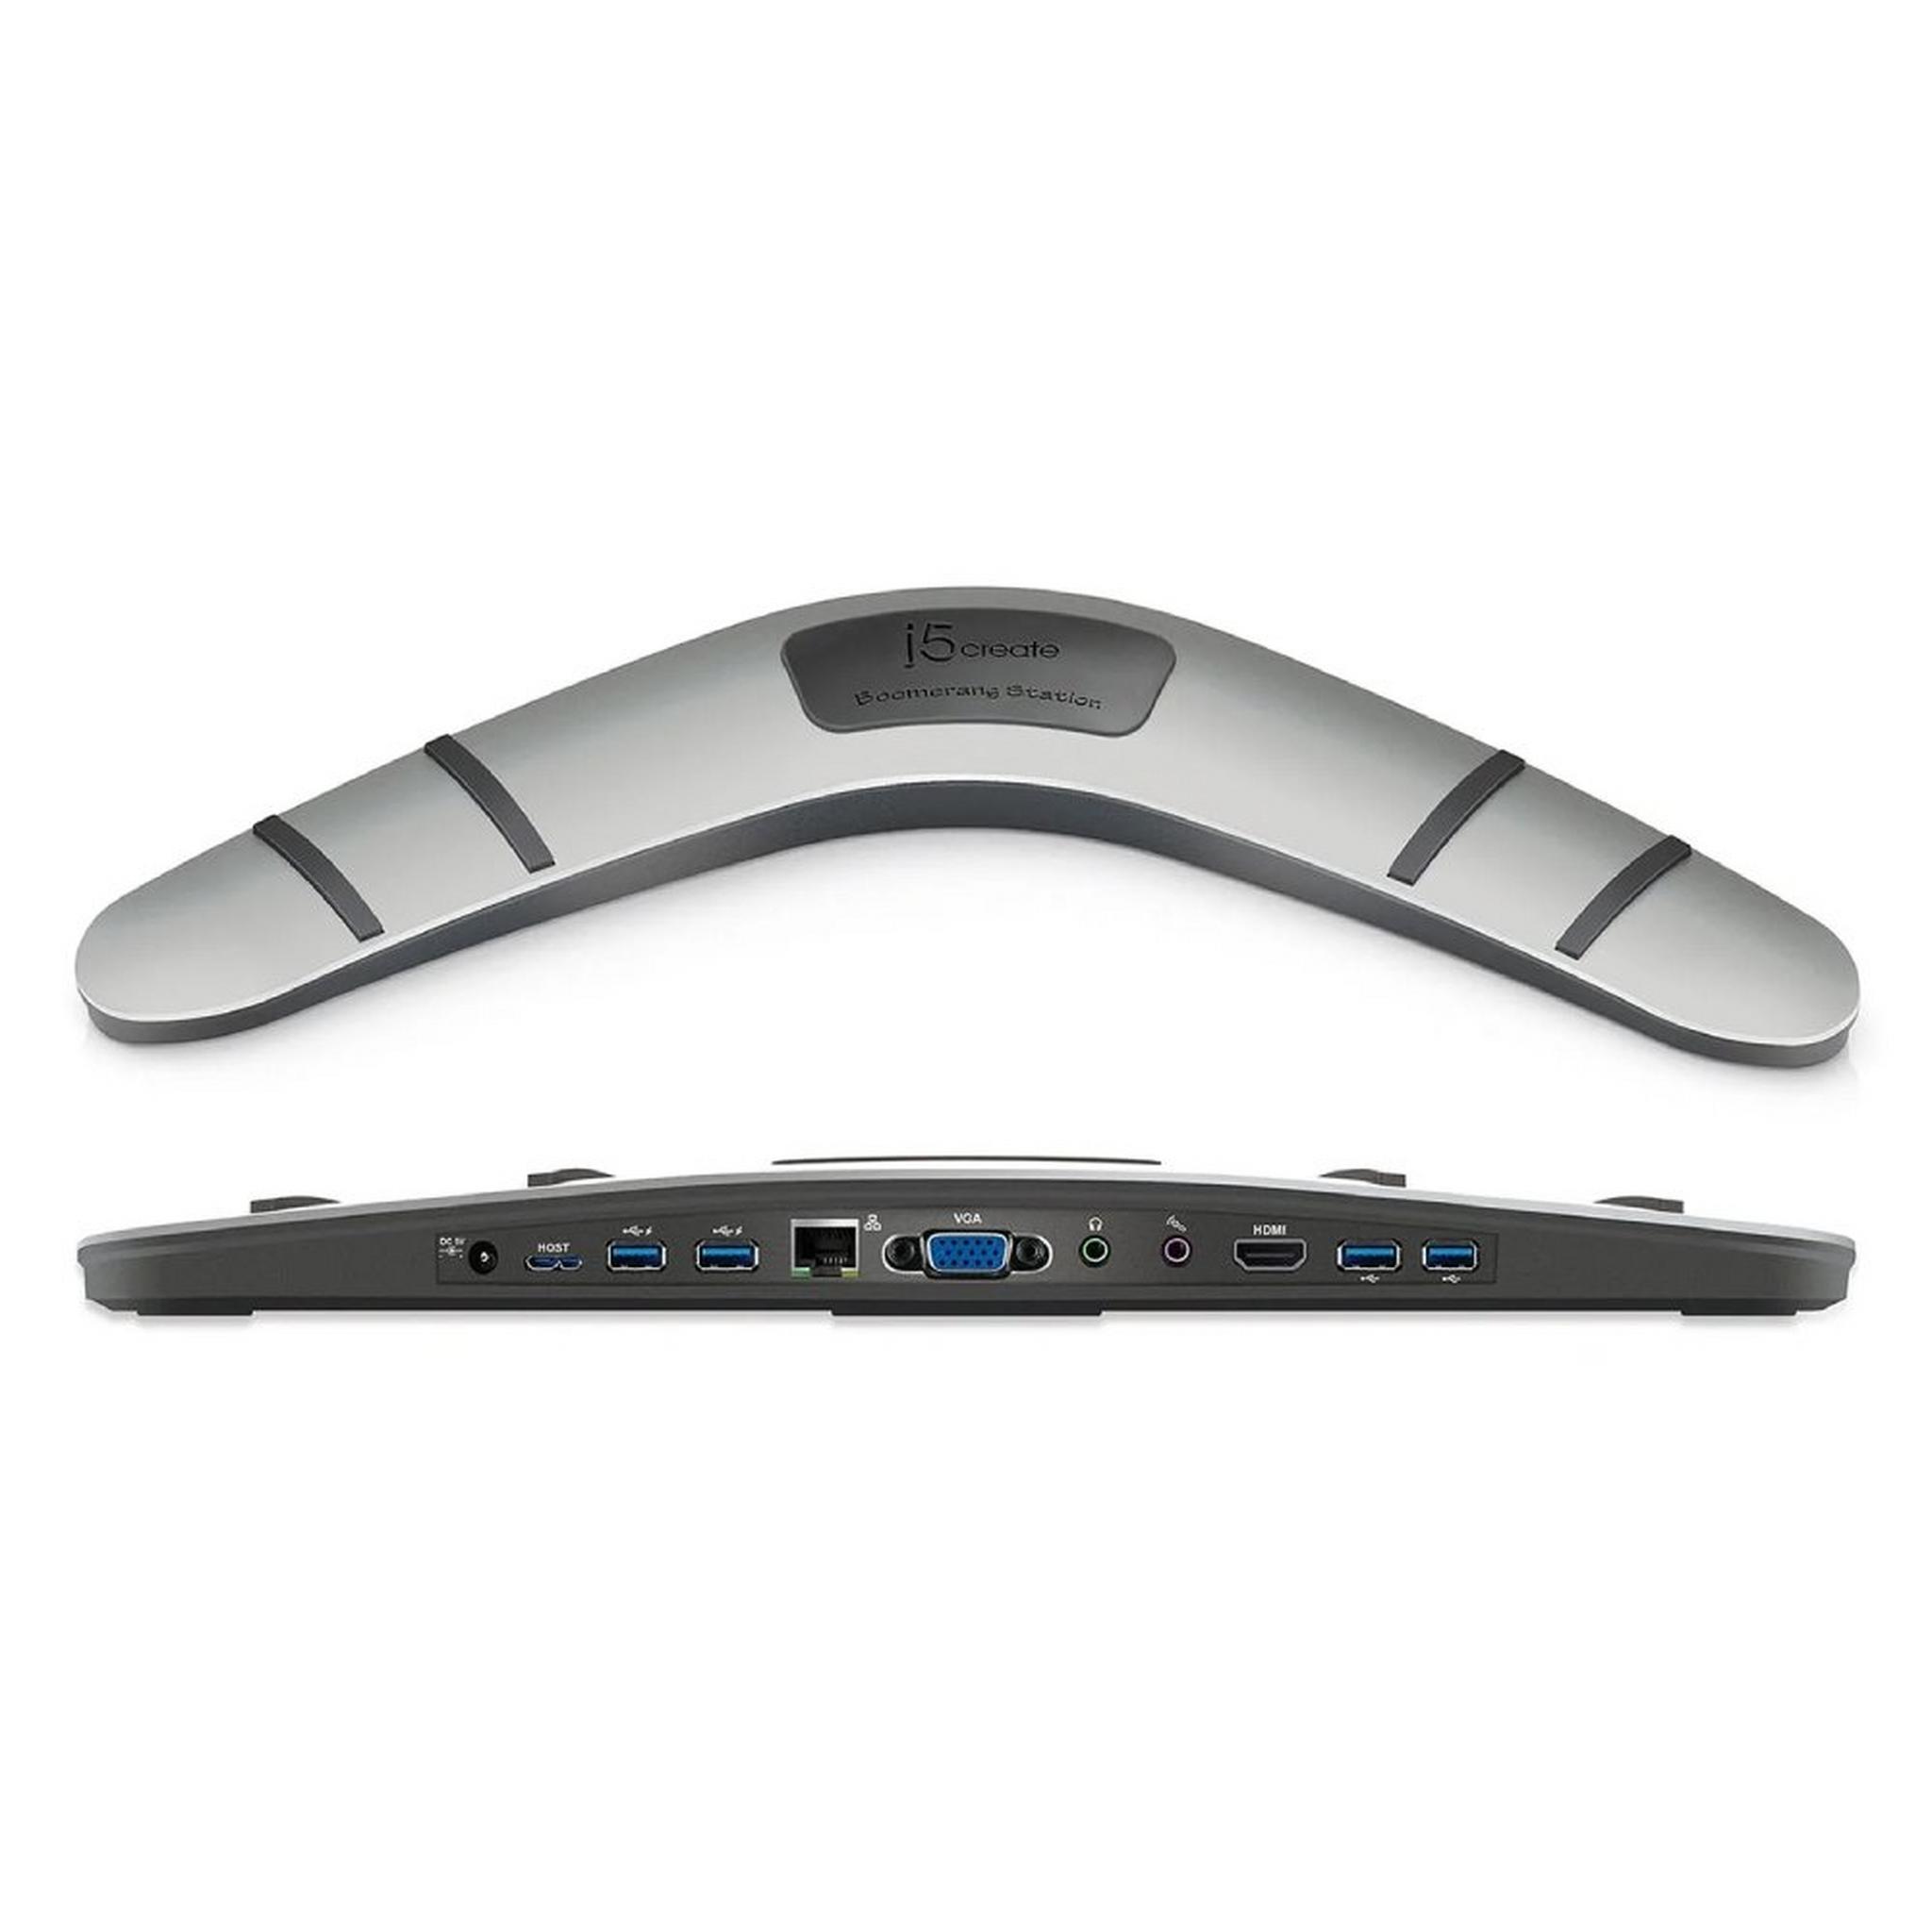 J5Create Boomerang Docking Station Universal USB3.0 (JUD481)